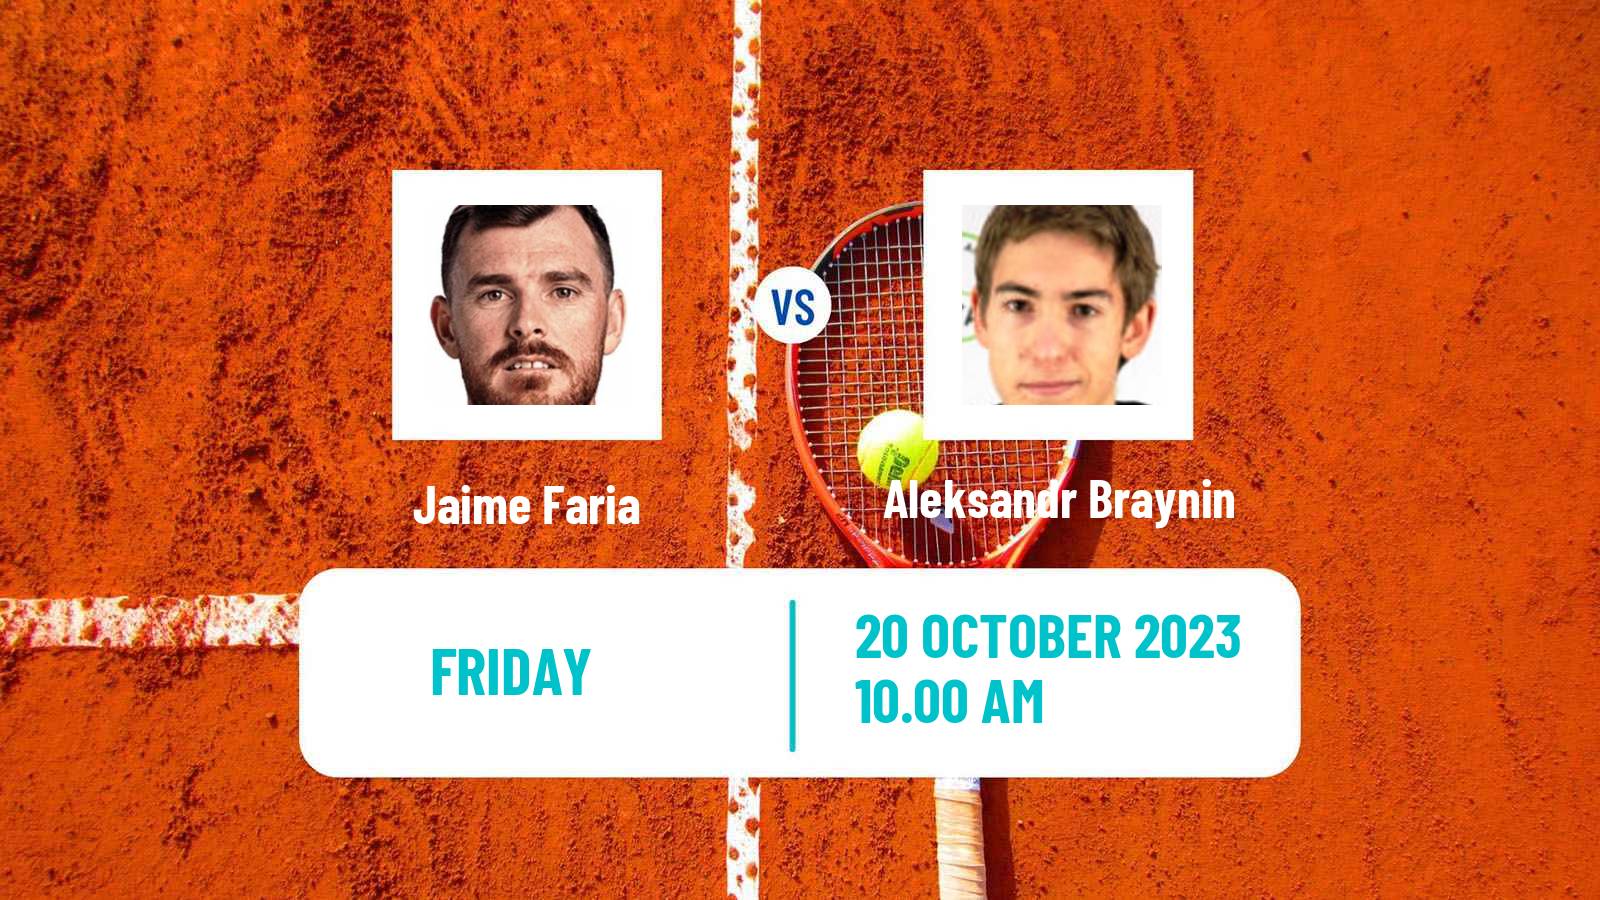 Tennis ITF M25 Tavira 2 Men Jaime Faria - Aleksandr Braynin